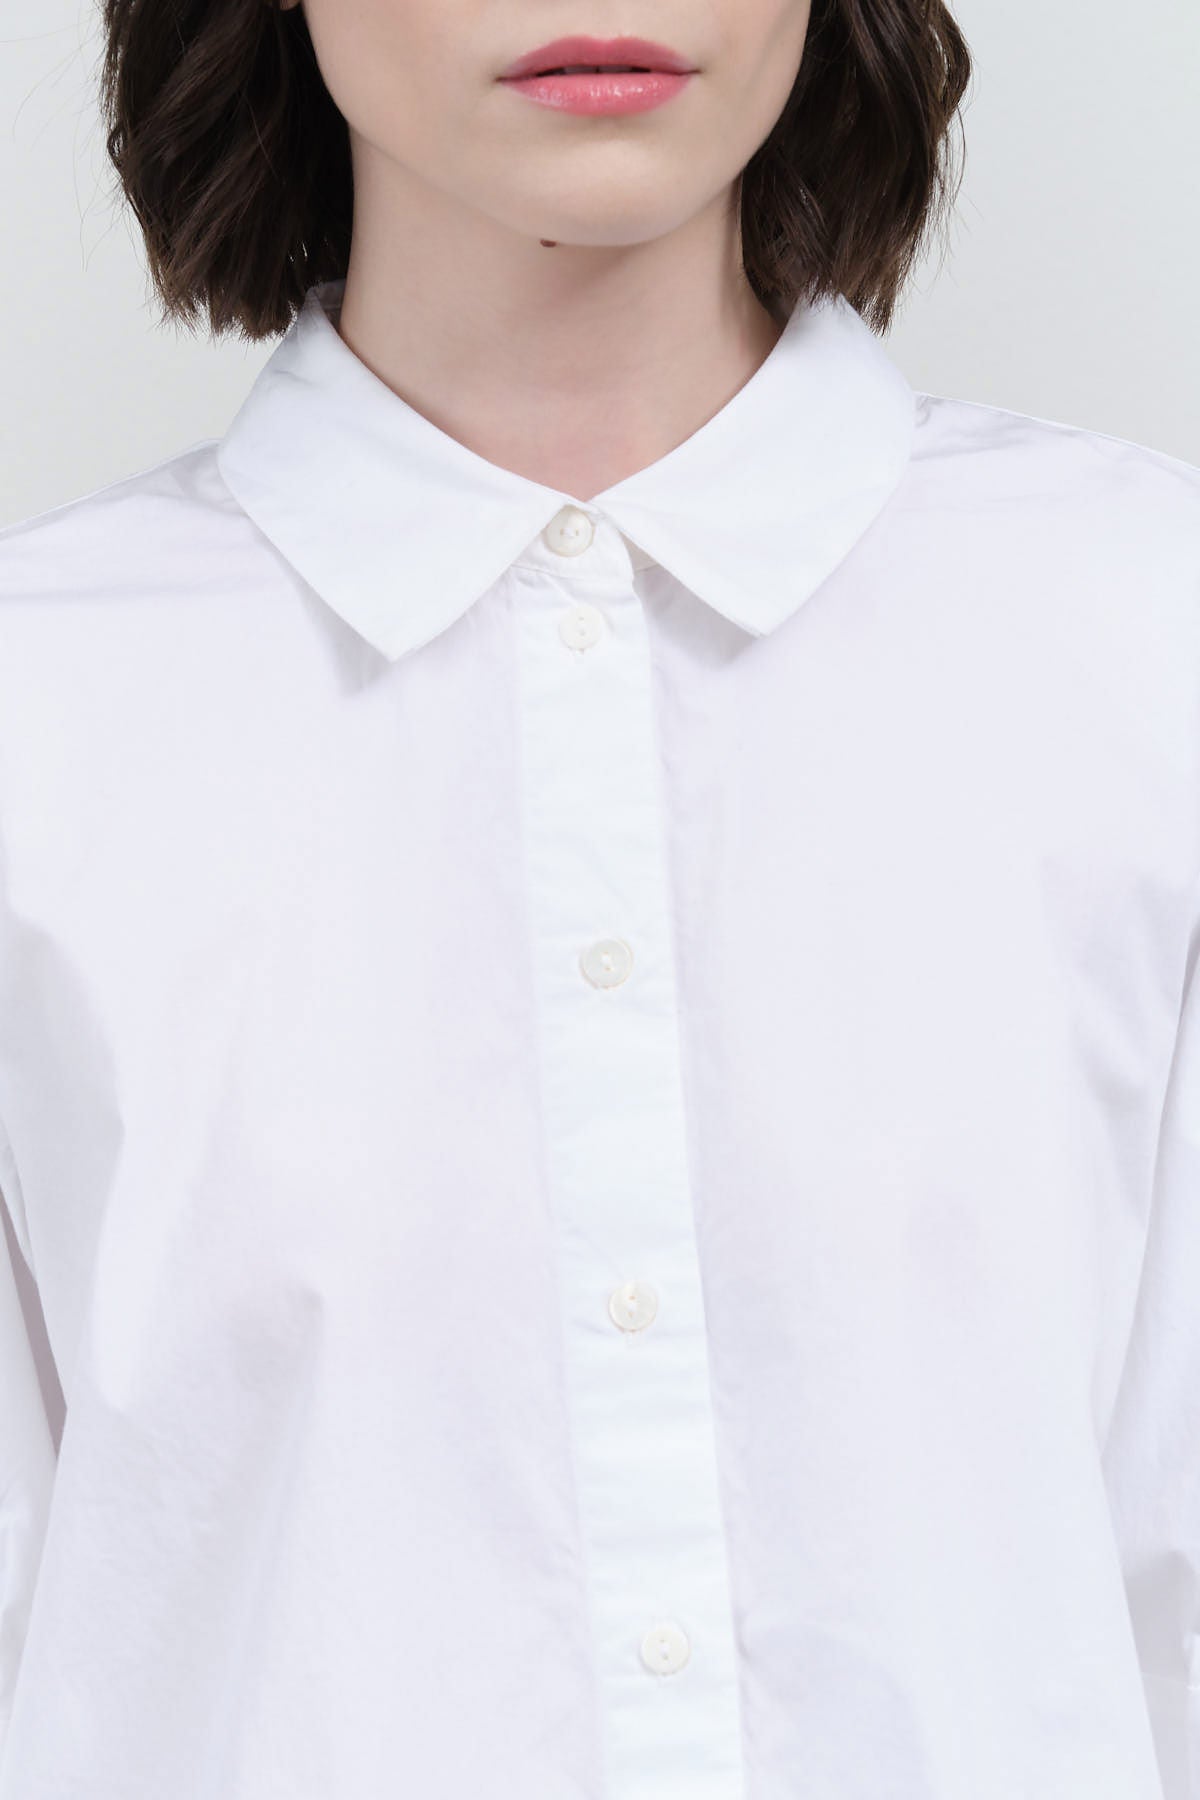 White Joan Shirt by Kowtow